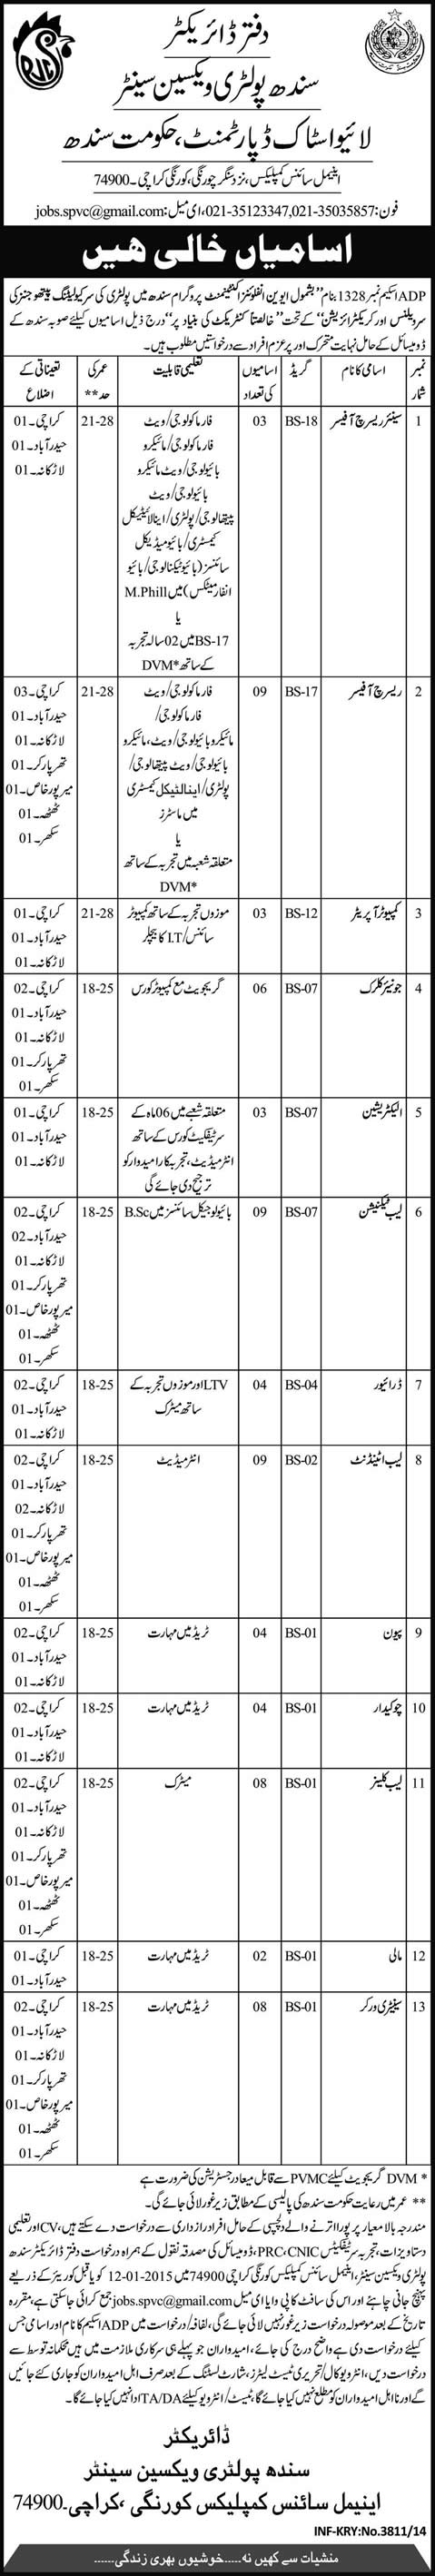 Sindh Poultry Vaccine Centre Jobs 2014 December Livestock Department Karachi & Other Cities